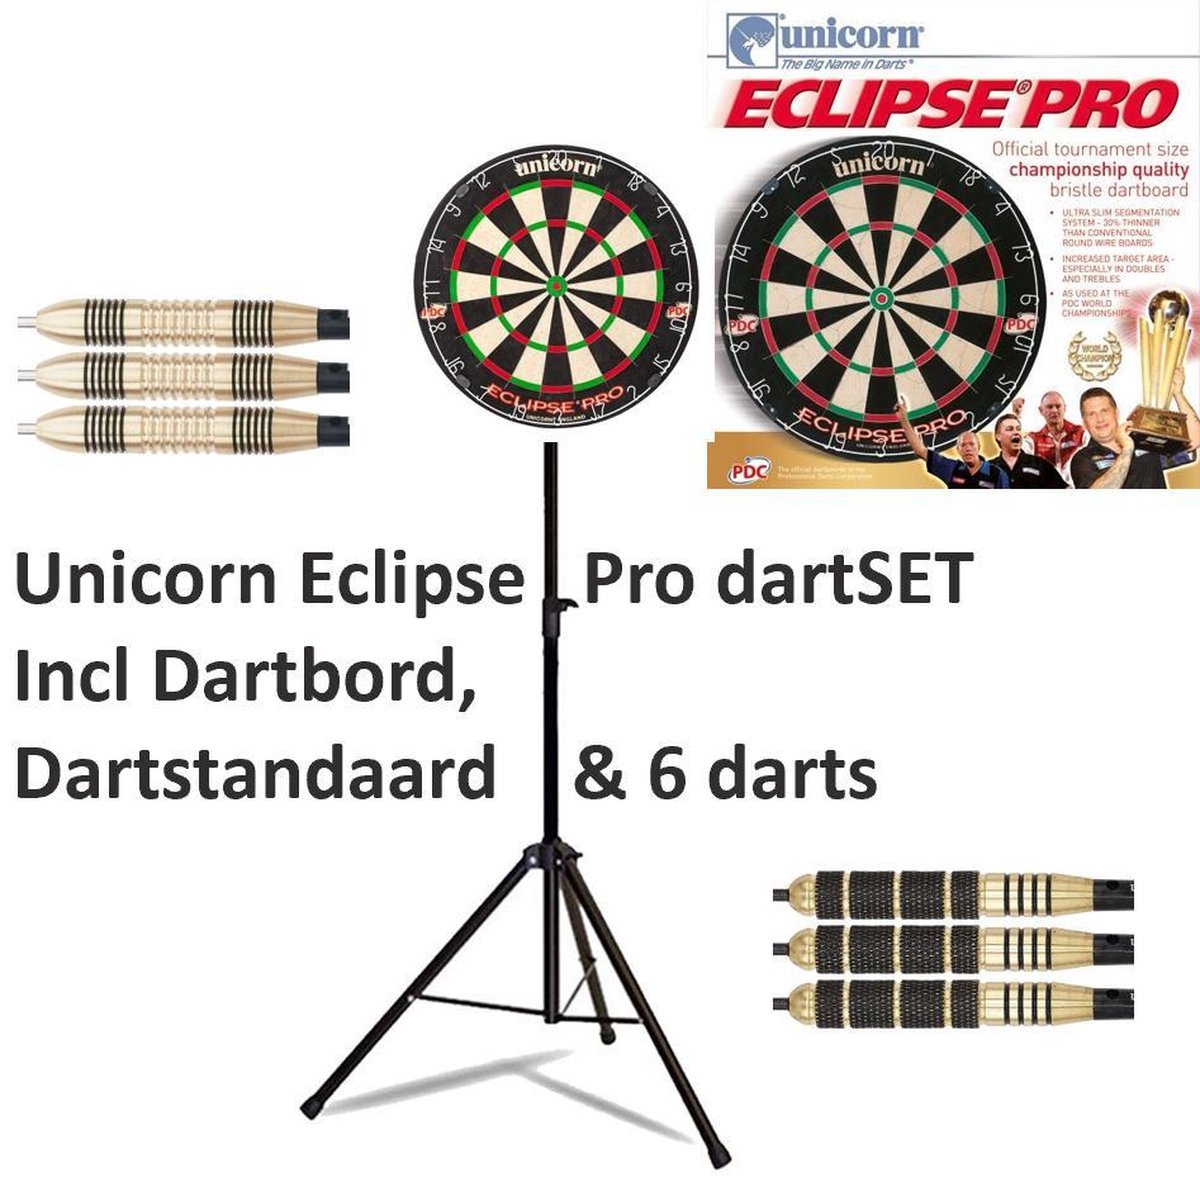 Unicorn Eclipse pro dartSET incl Dartstandaard & 6 darts - Unicorn